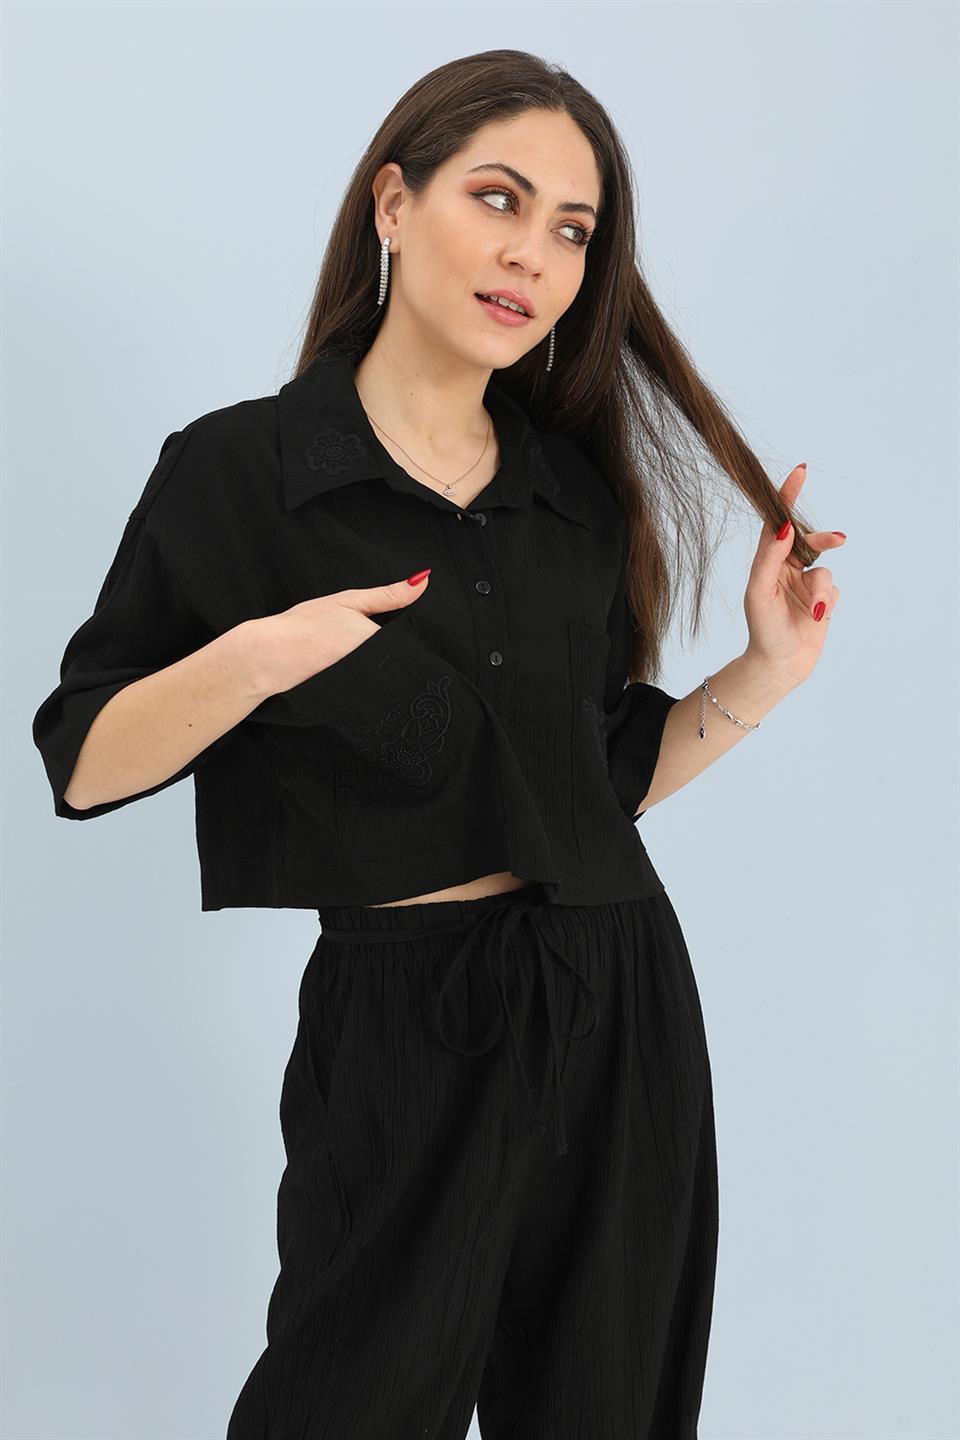 Women's Suit Embroidery Detailed Viscose Shirt Pants - Black - STREET MODE ™